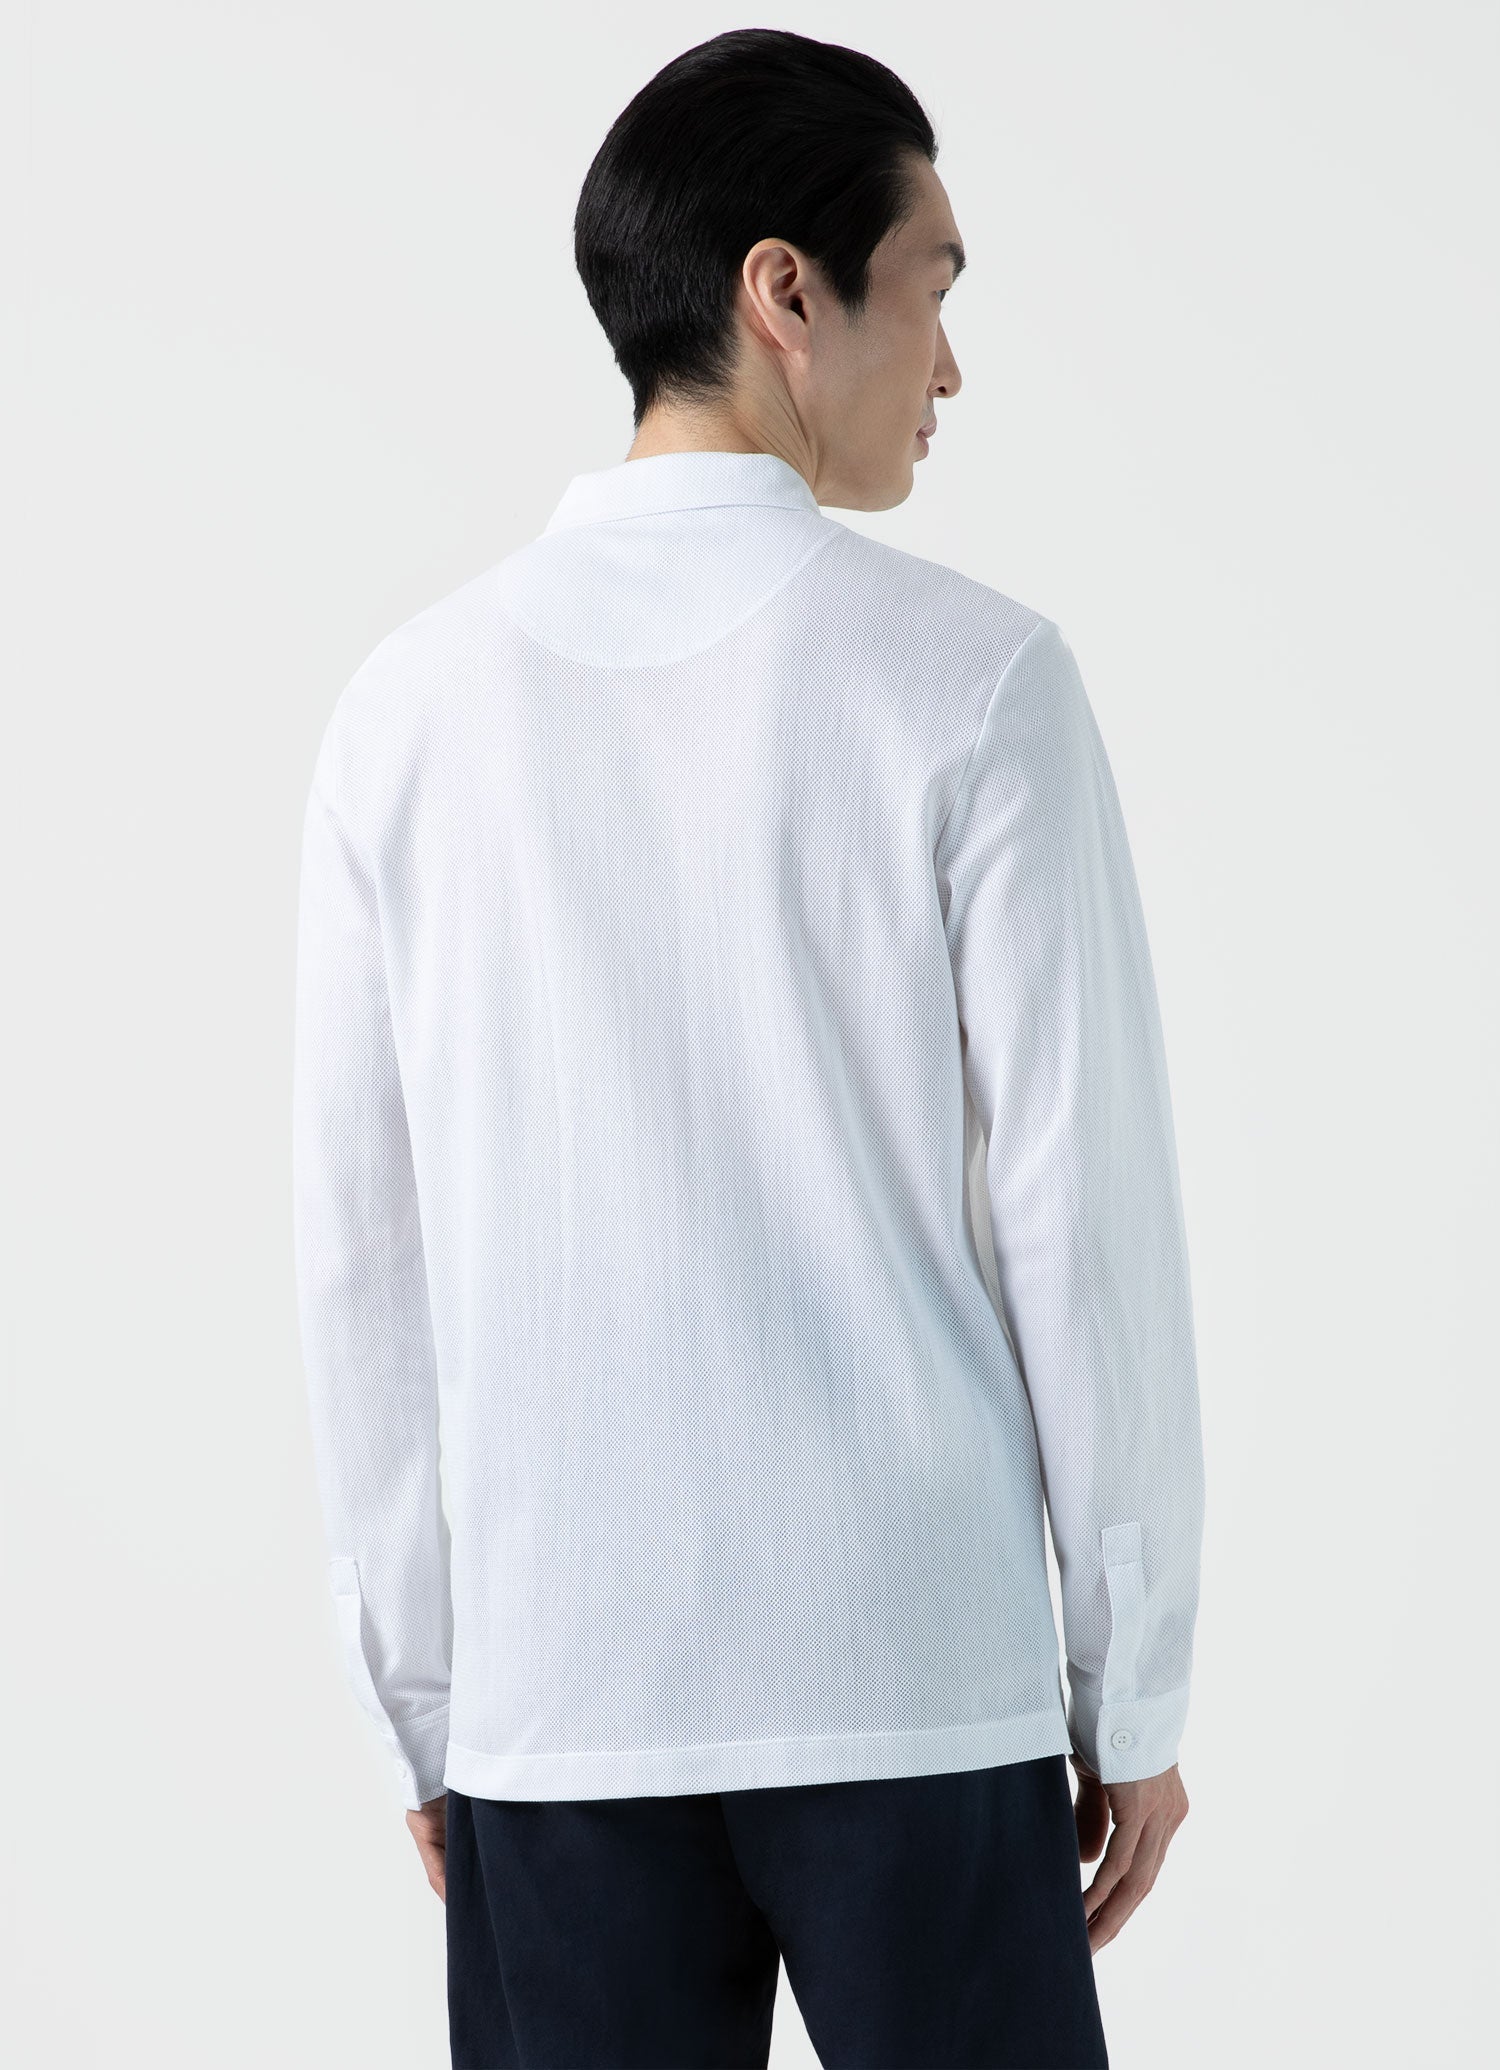 Men's Riviera Shirt in White